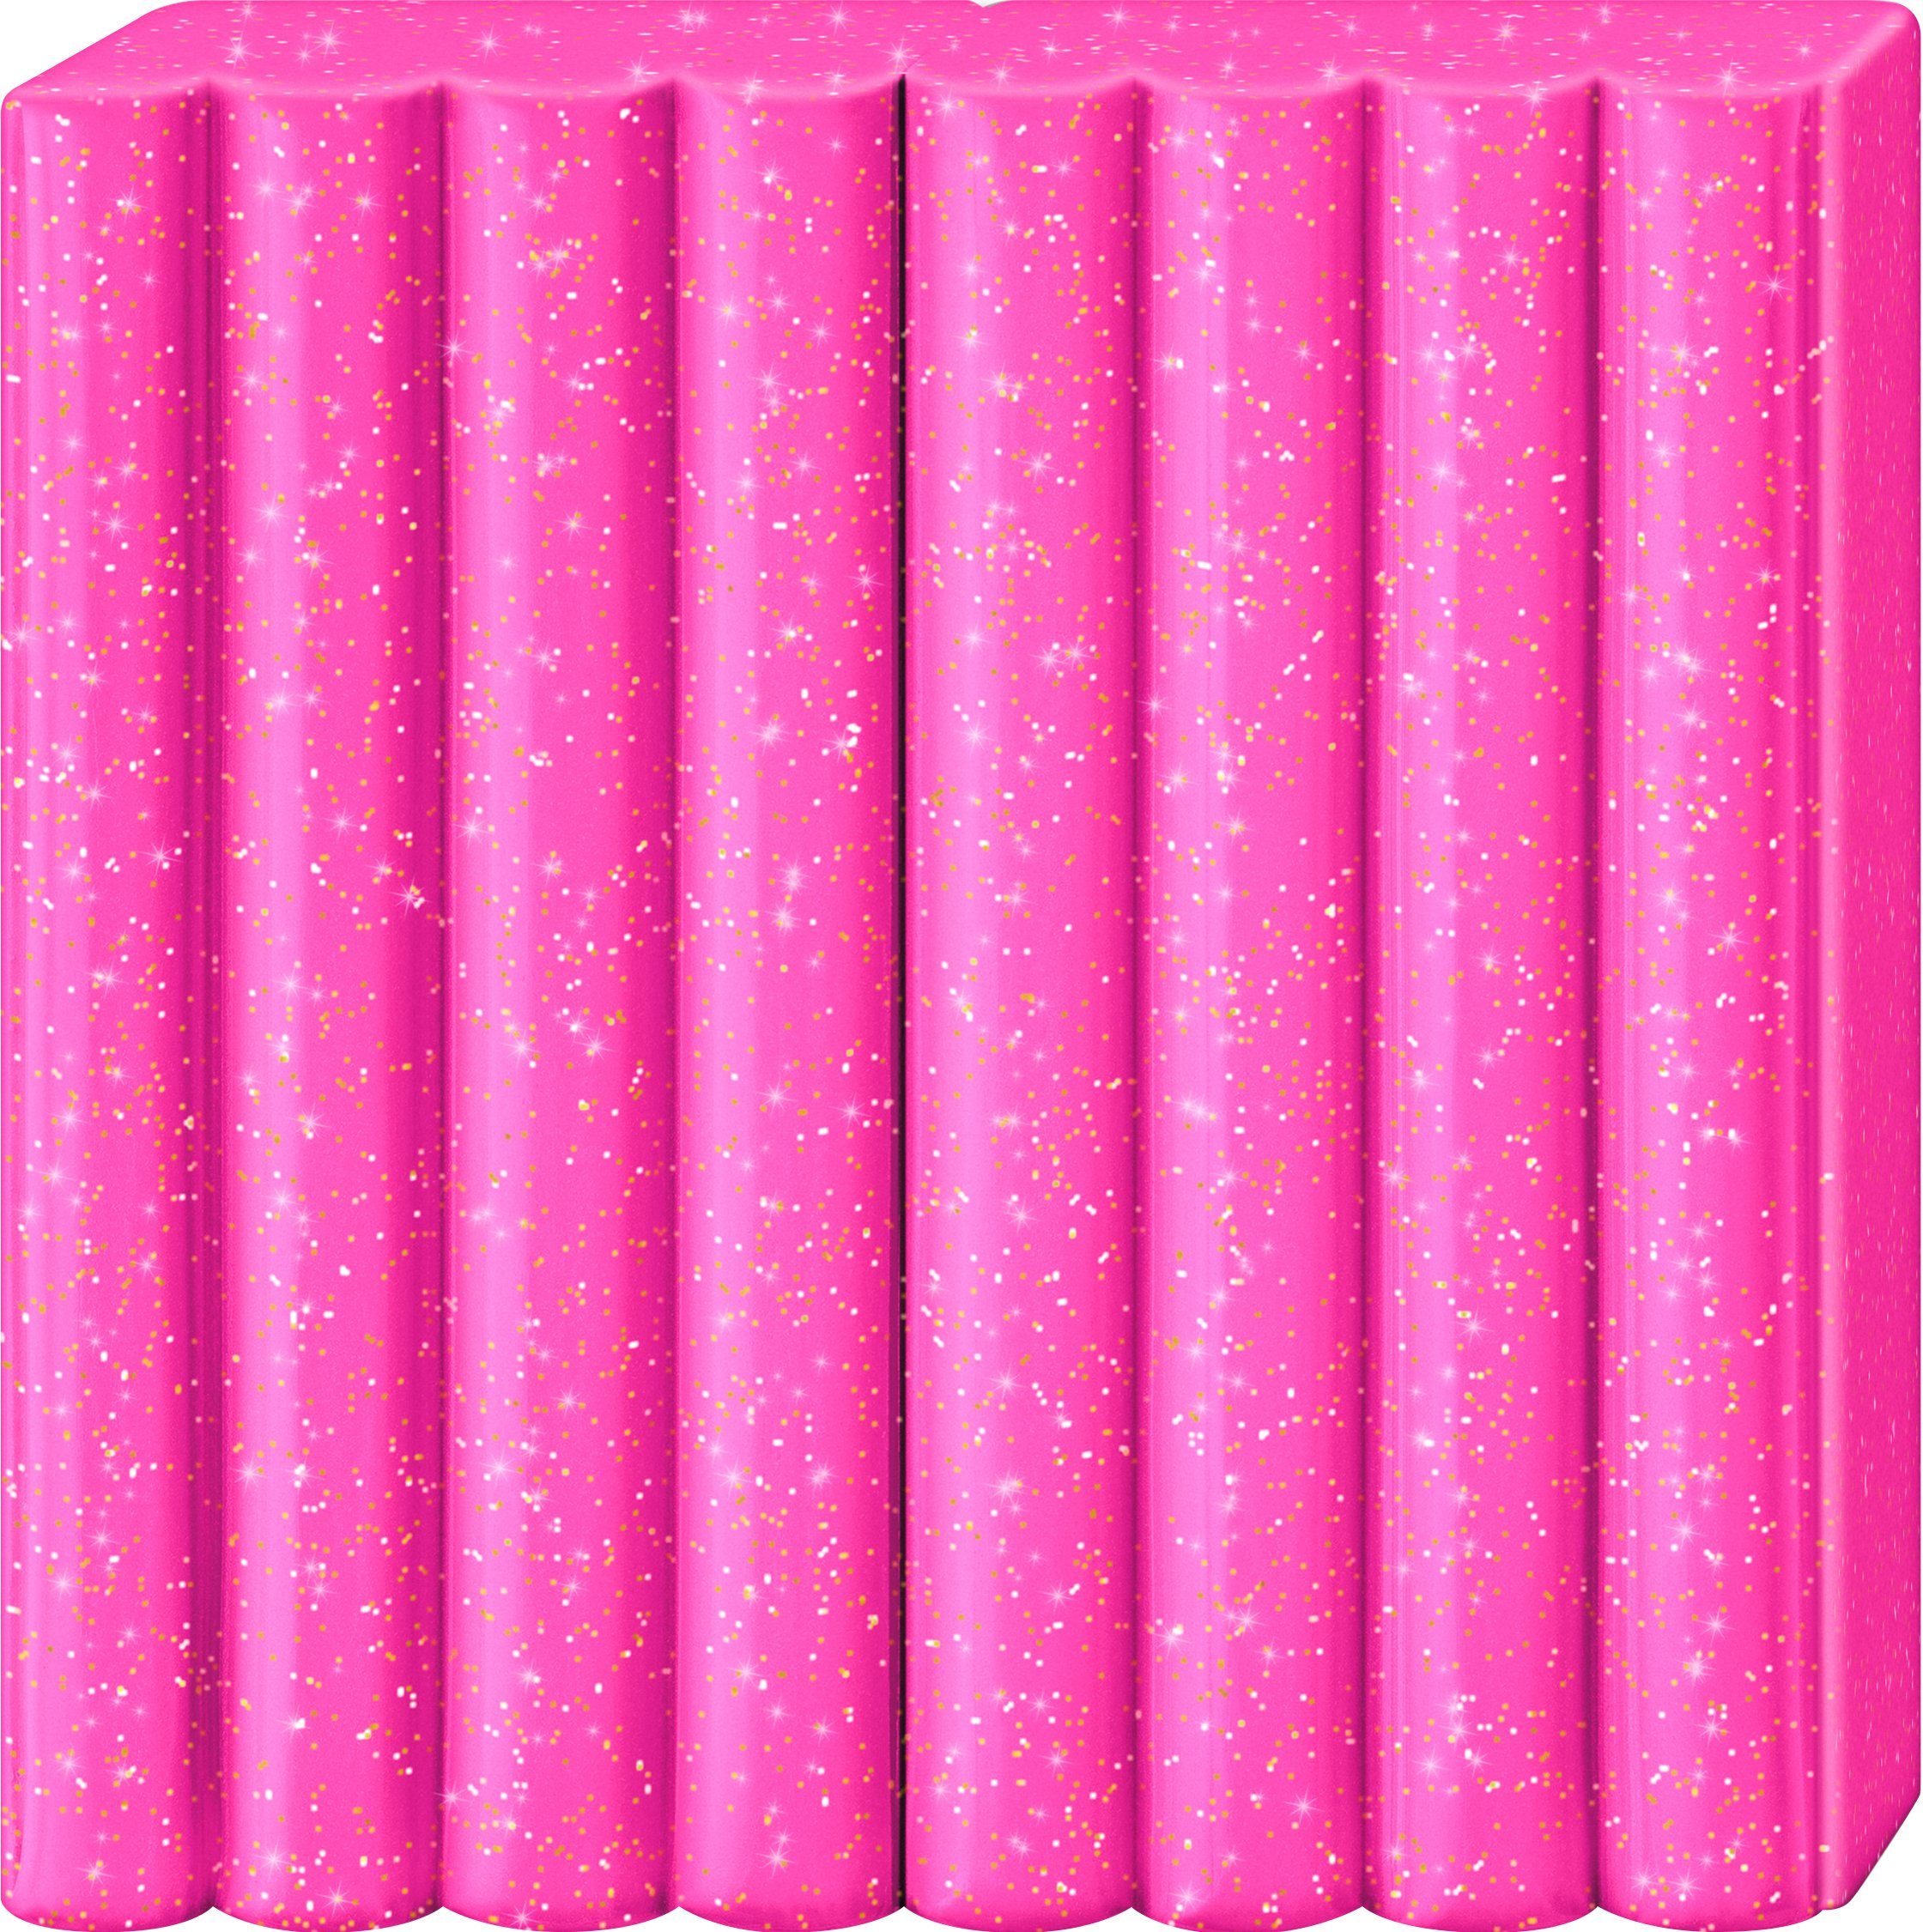 kids, g 42 FIMO Modelliermasse Glitter-Pink